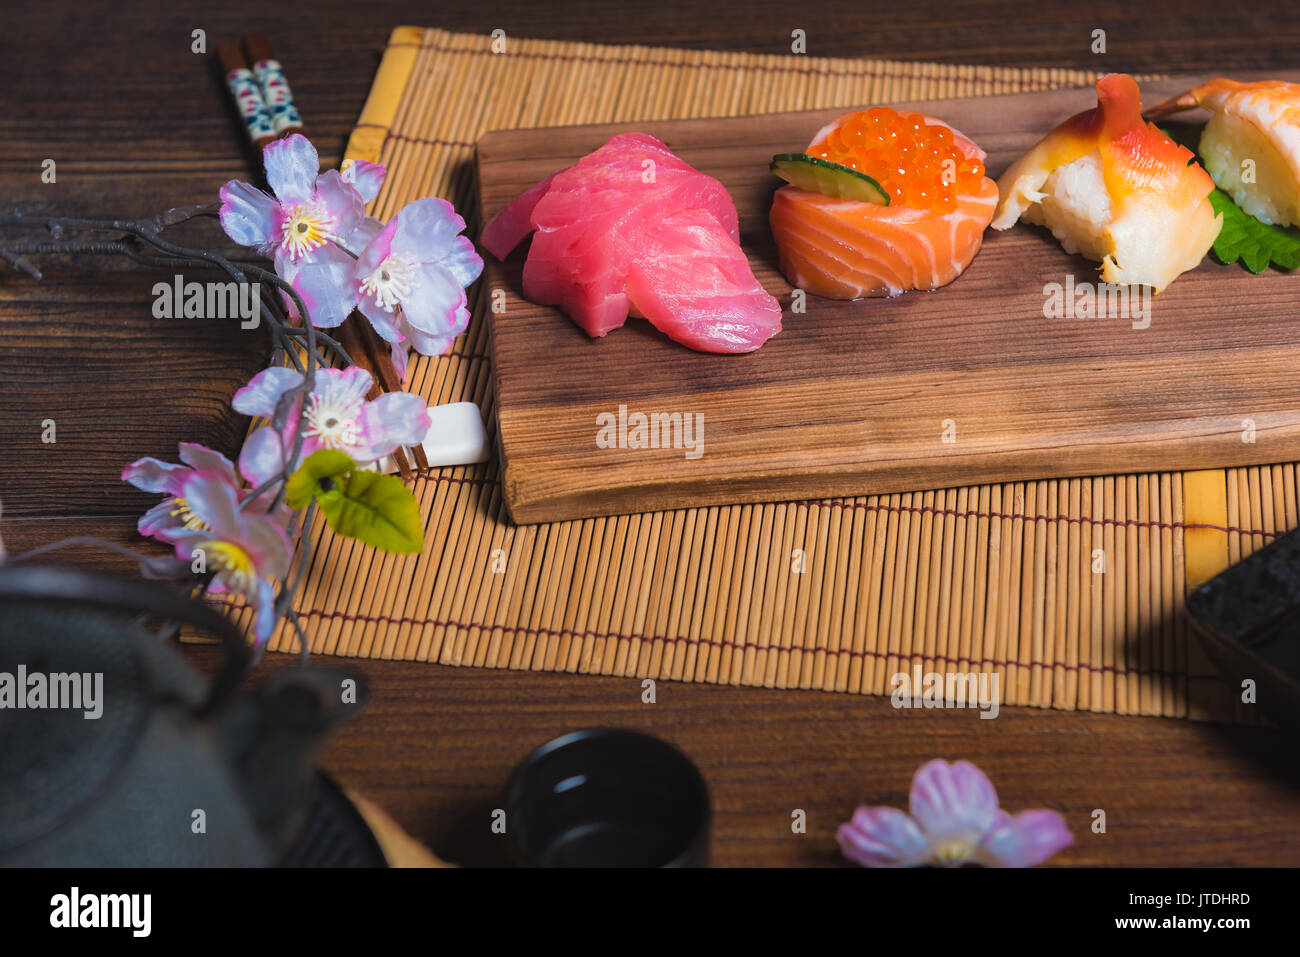 https://c8.alamy.com/comp/JTDHRD/traditional-japanese-cuisine-process-of-eating-sushi-rolls-or-sushi-JTDHRD.jpg